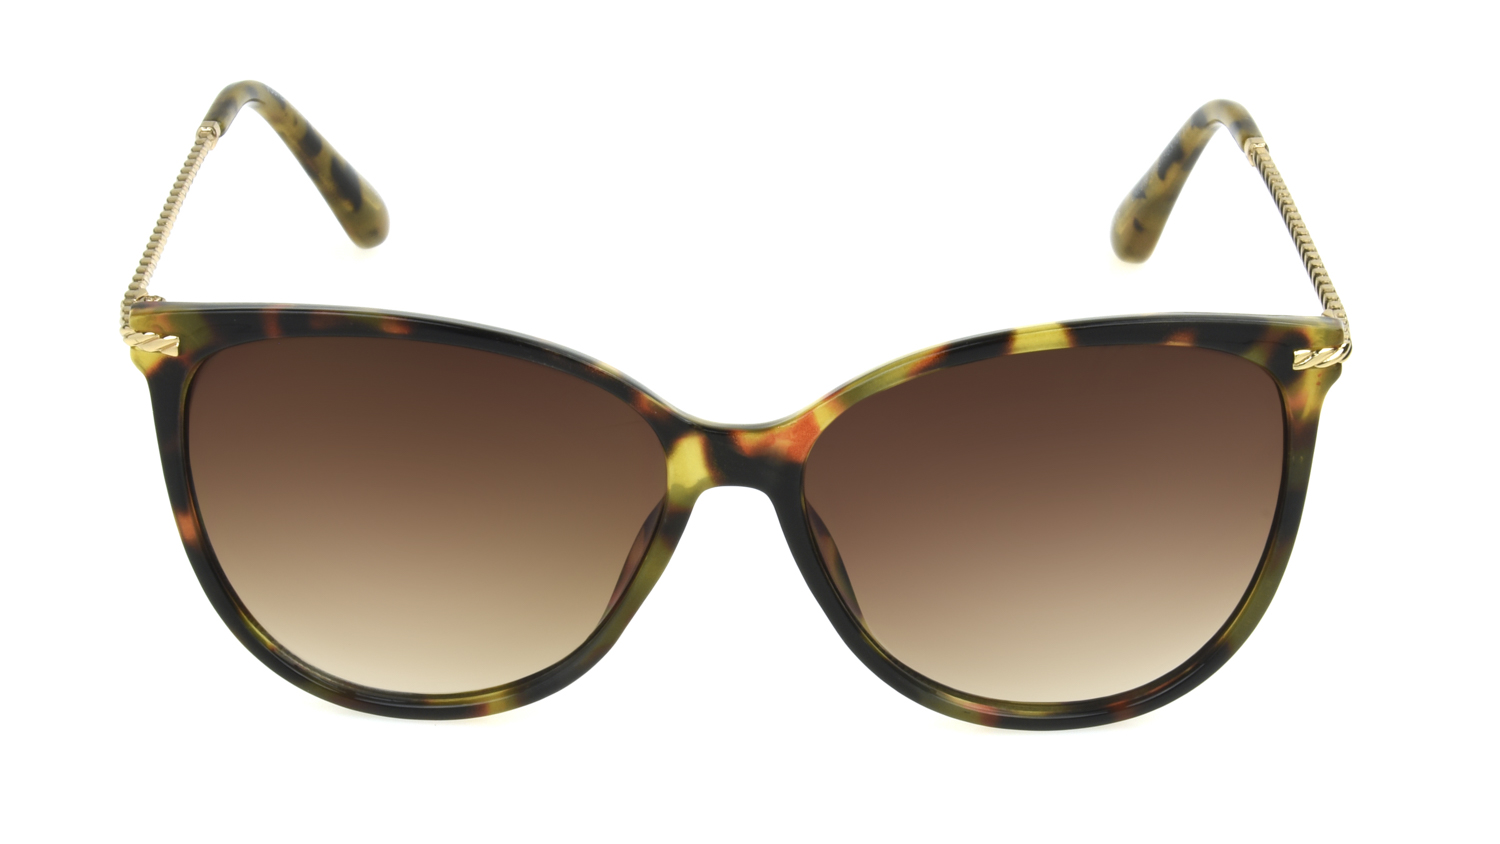 Foster Grant Women's Cat Eye Fashion Sunglasses Tortoise - image 1 of 6